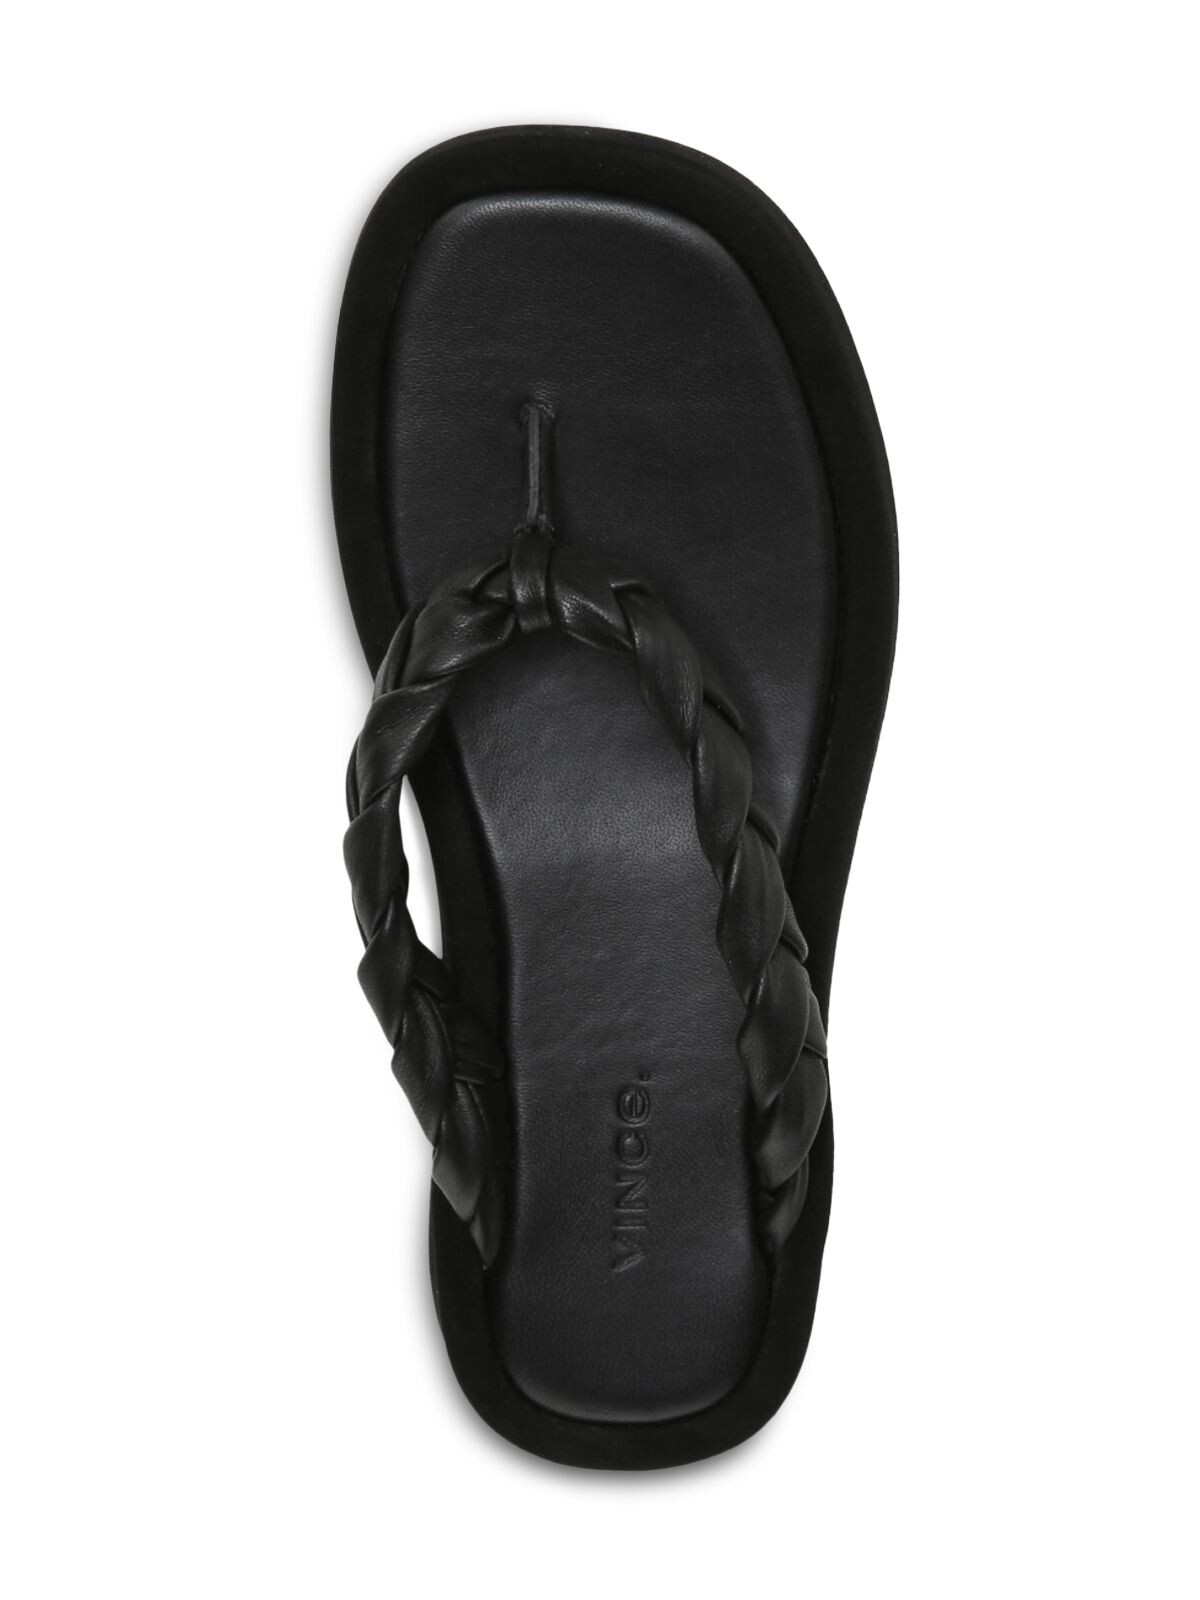 VINCE. Womens Black Braided Padded Nita Round Toe Platform Slip On Leather Flip Flop Sandal 11 M